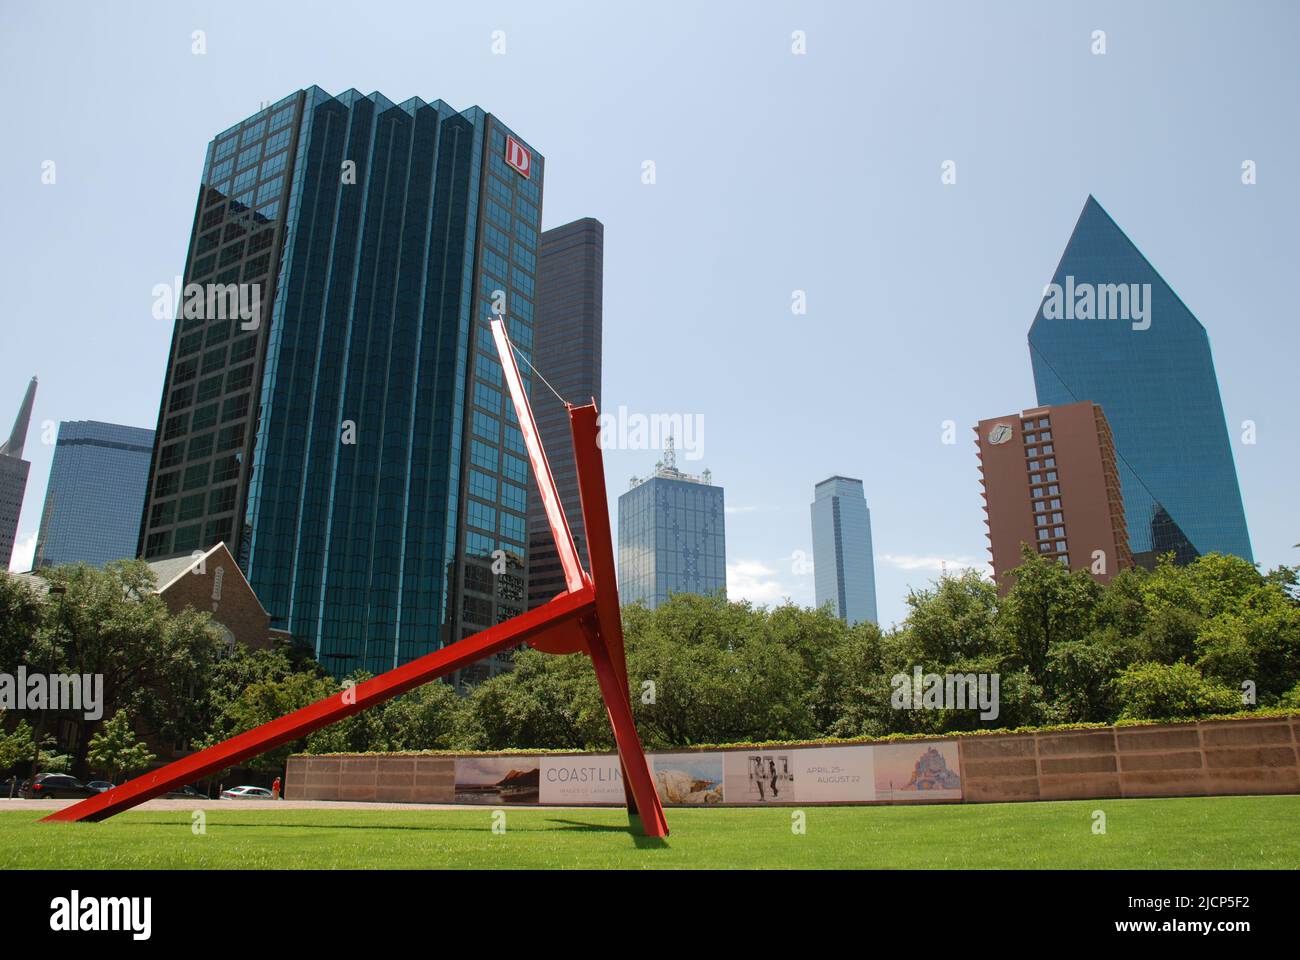 Iconic sculpture 'Ave' by Mark di Suvero in front of the Dallas Museum of Art in Dallas Texas Stock Photo